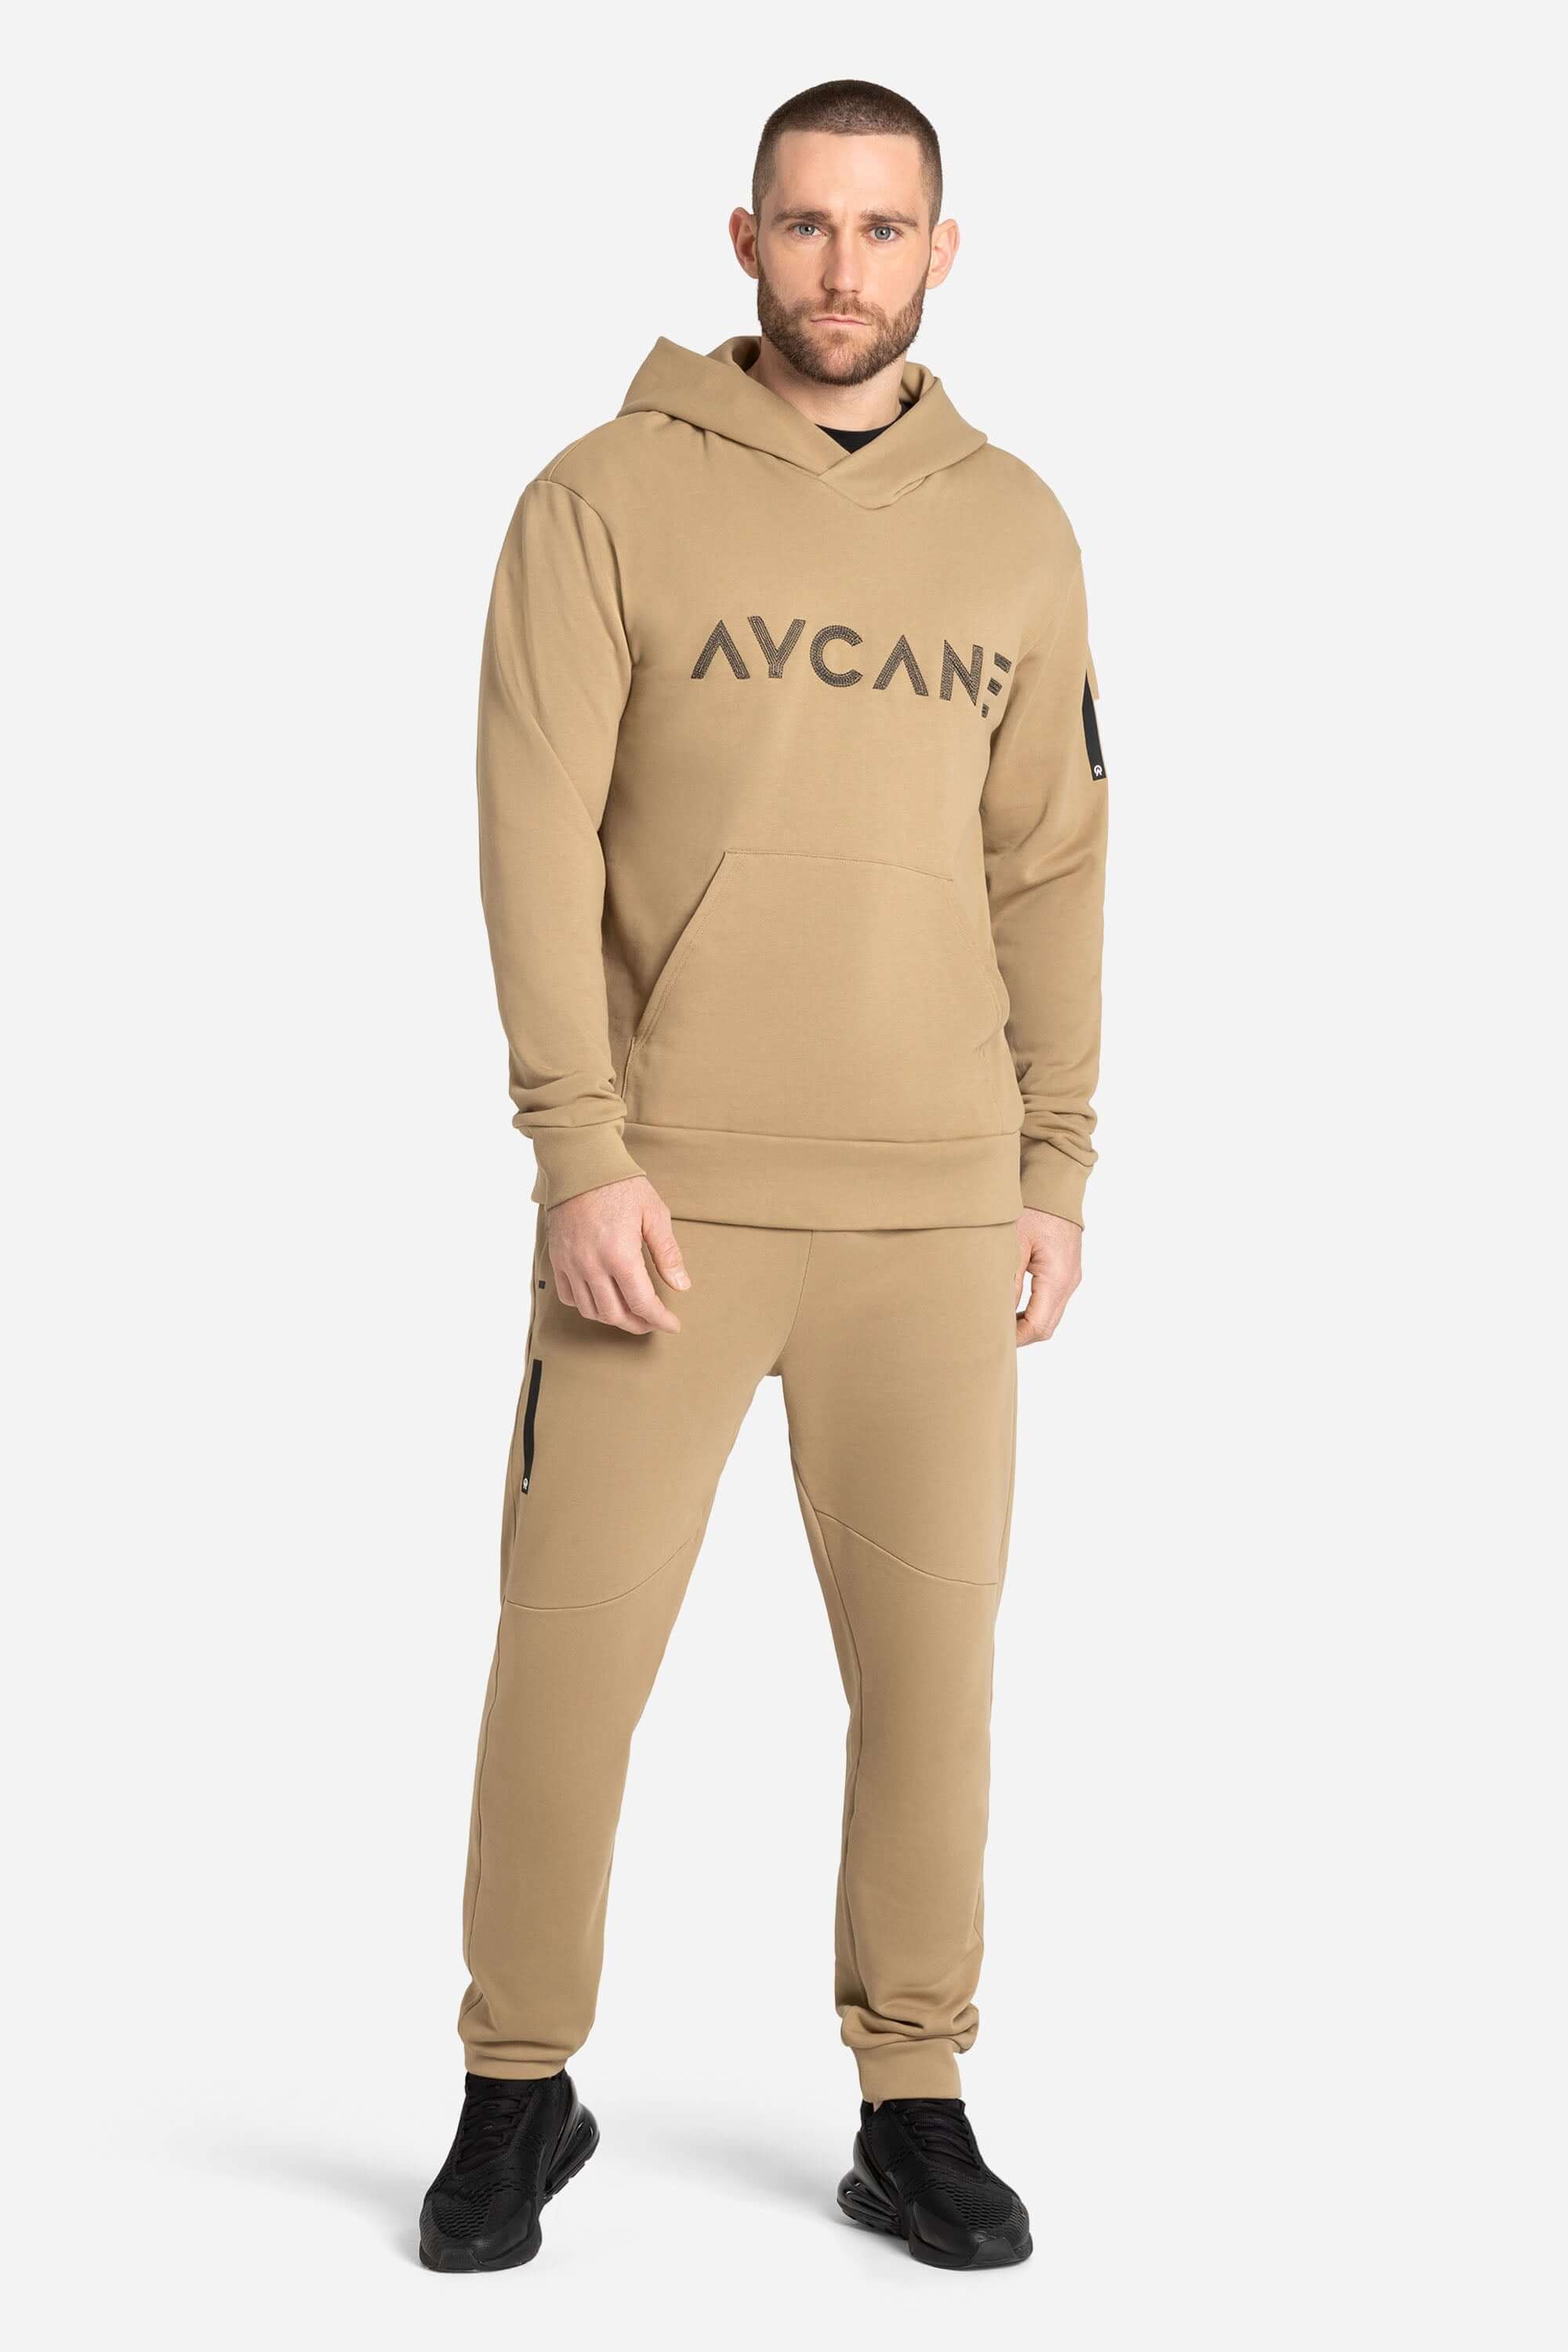 Khaki training and leisure hoodie with AYCANE logo in black 